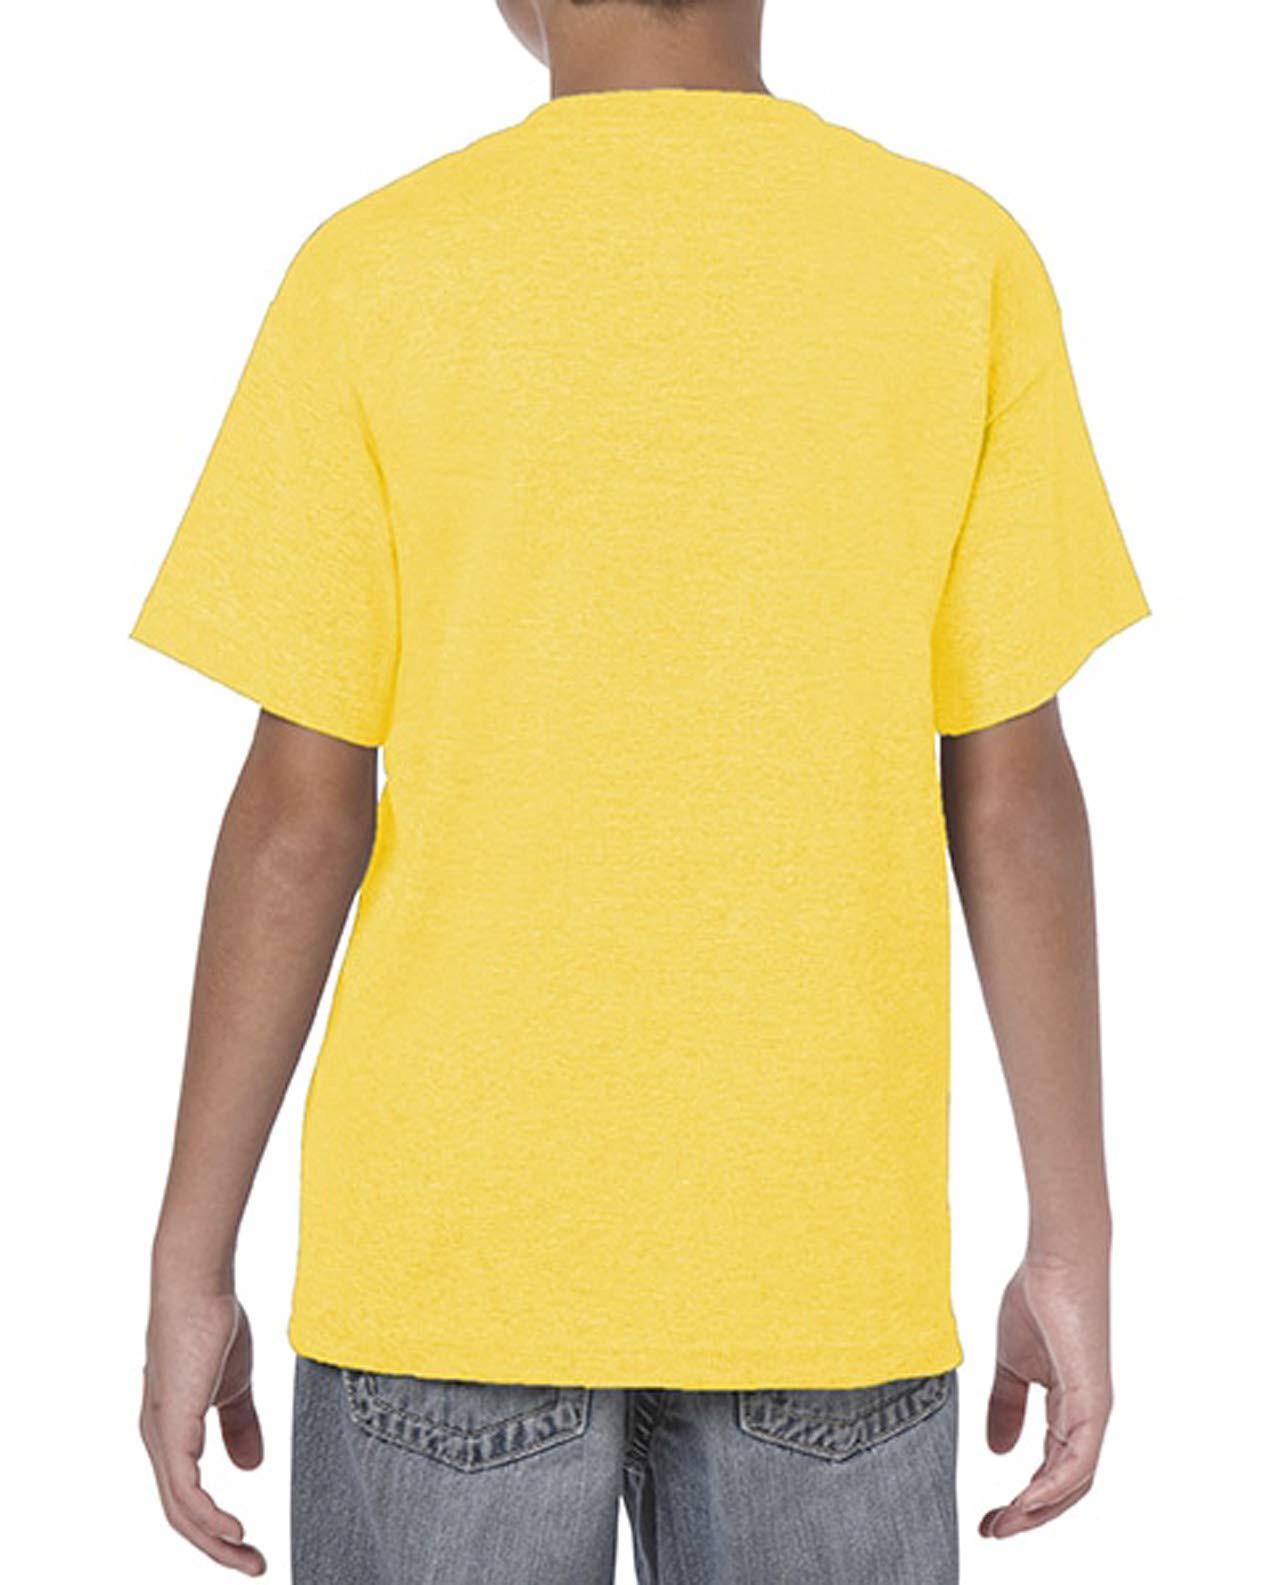 Gildan Boy's Softstyle 4.5 Oz Short Sleeve T-Shirt